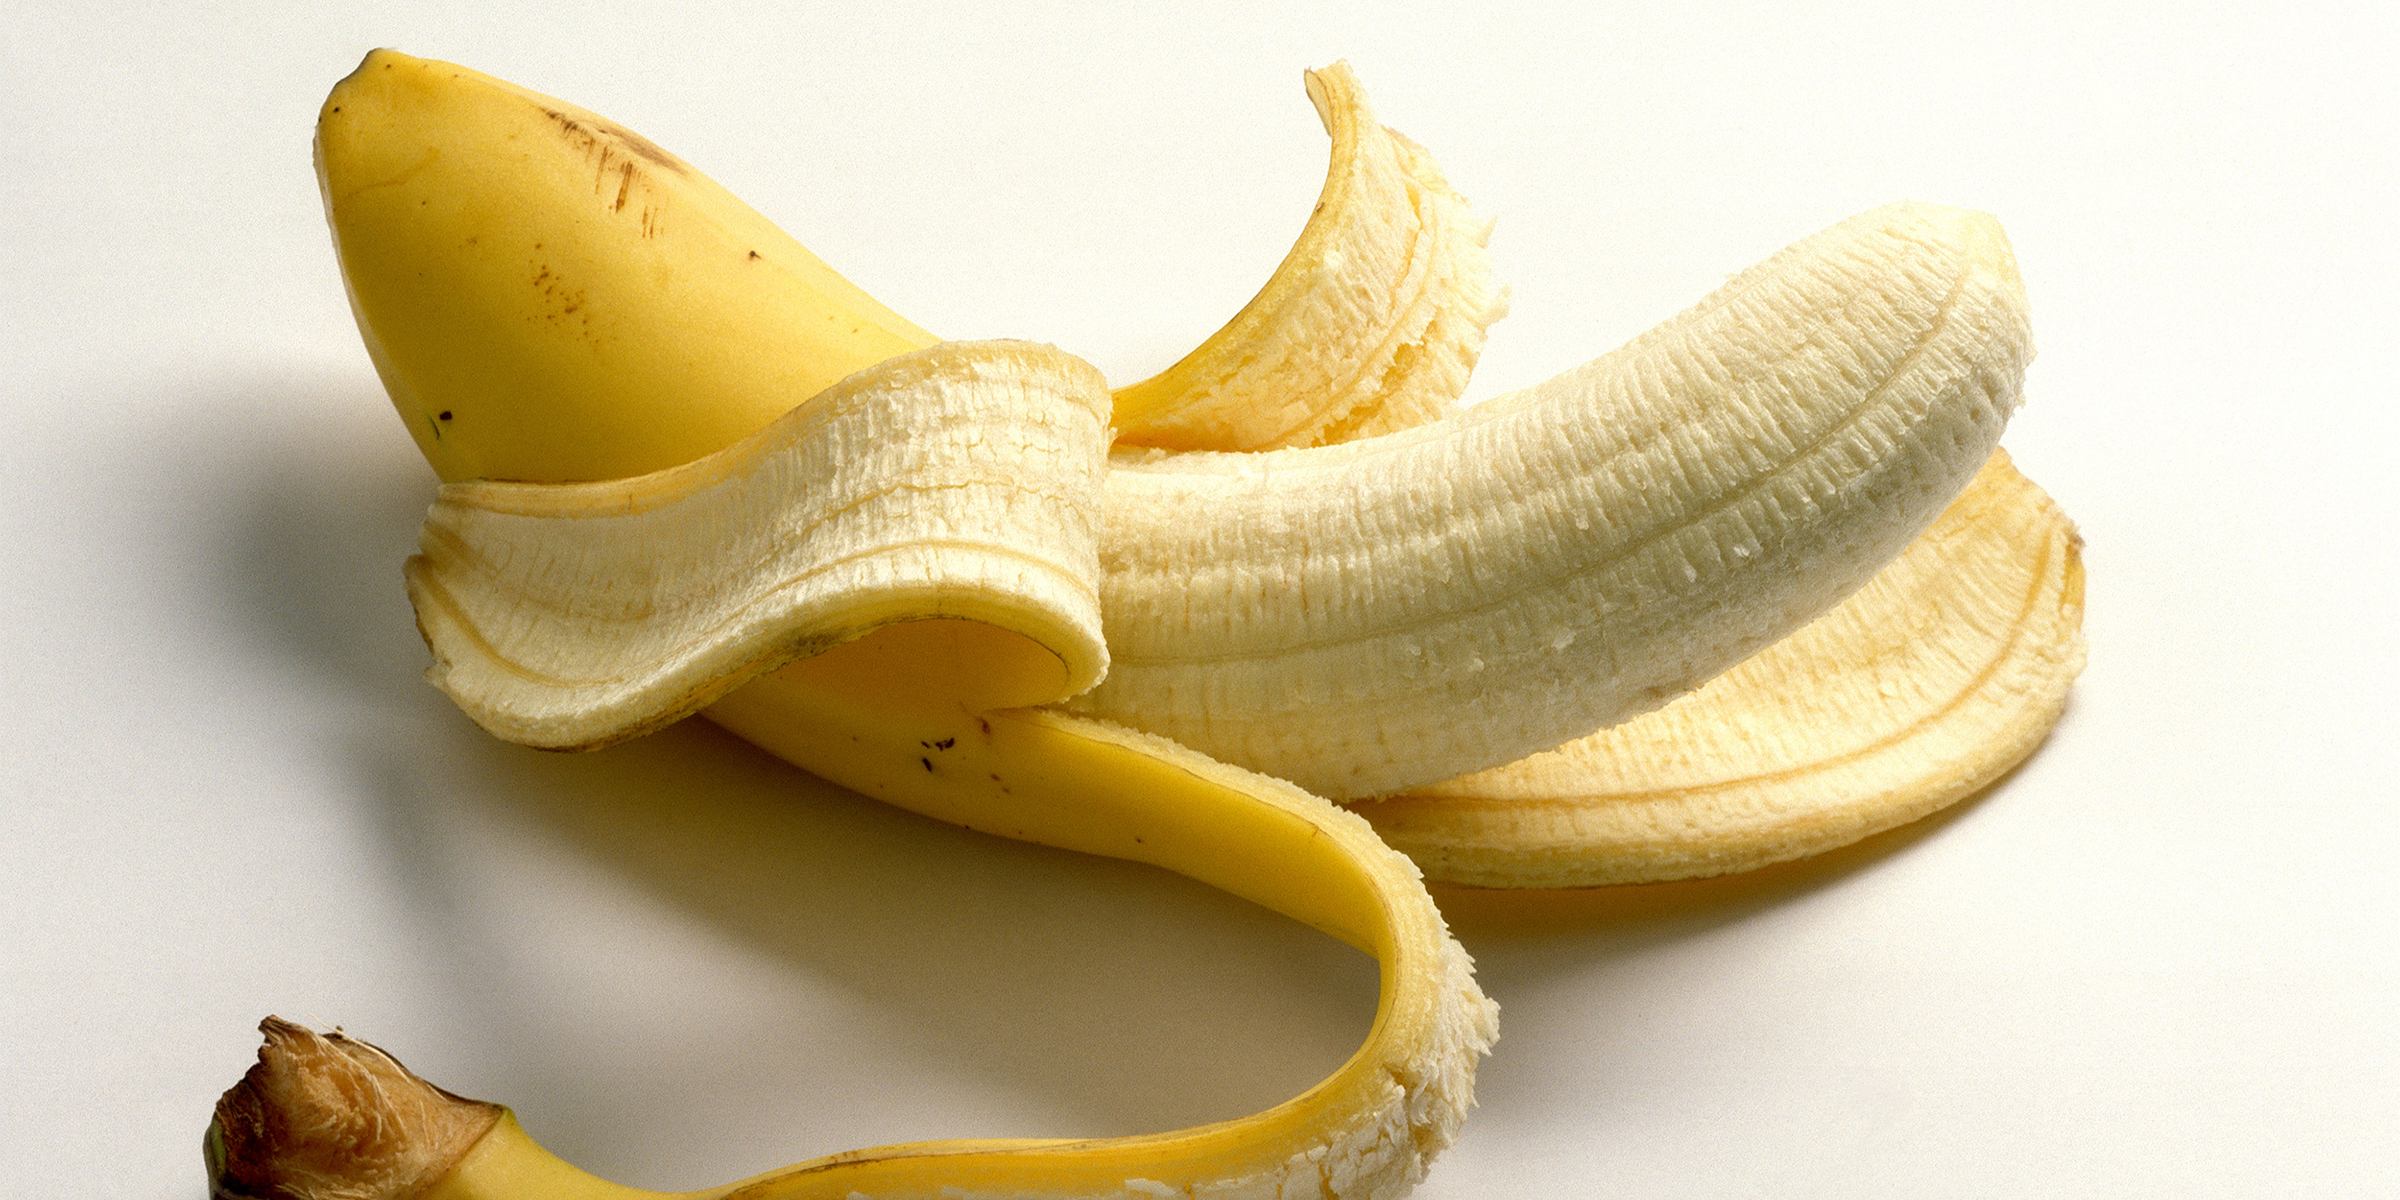 Peeled banana.